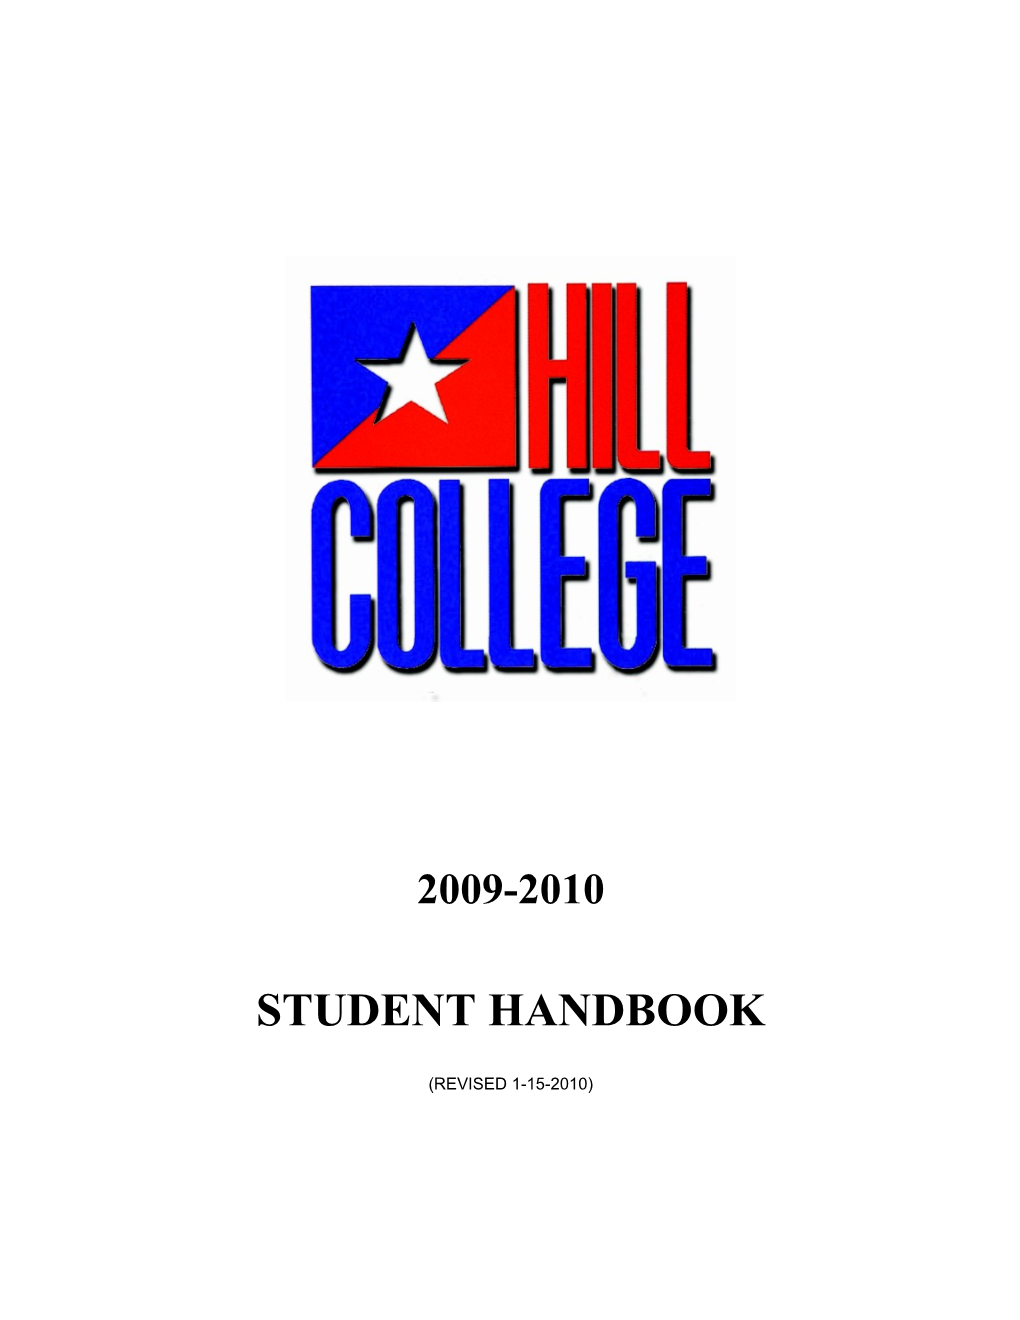 Student Handbook s1